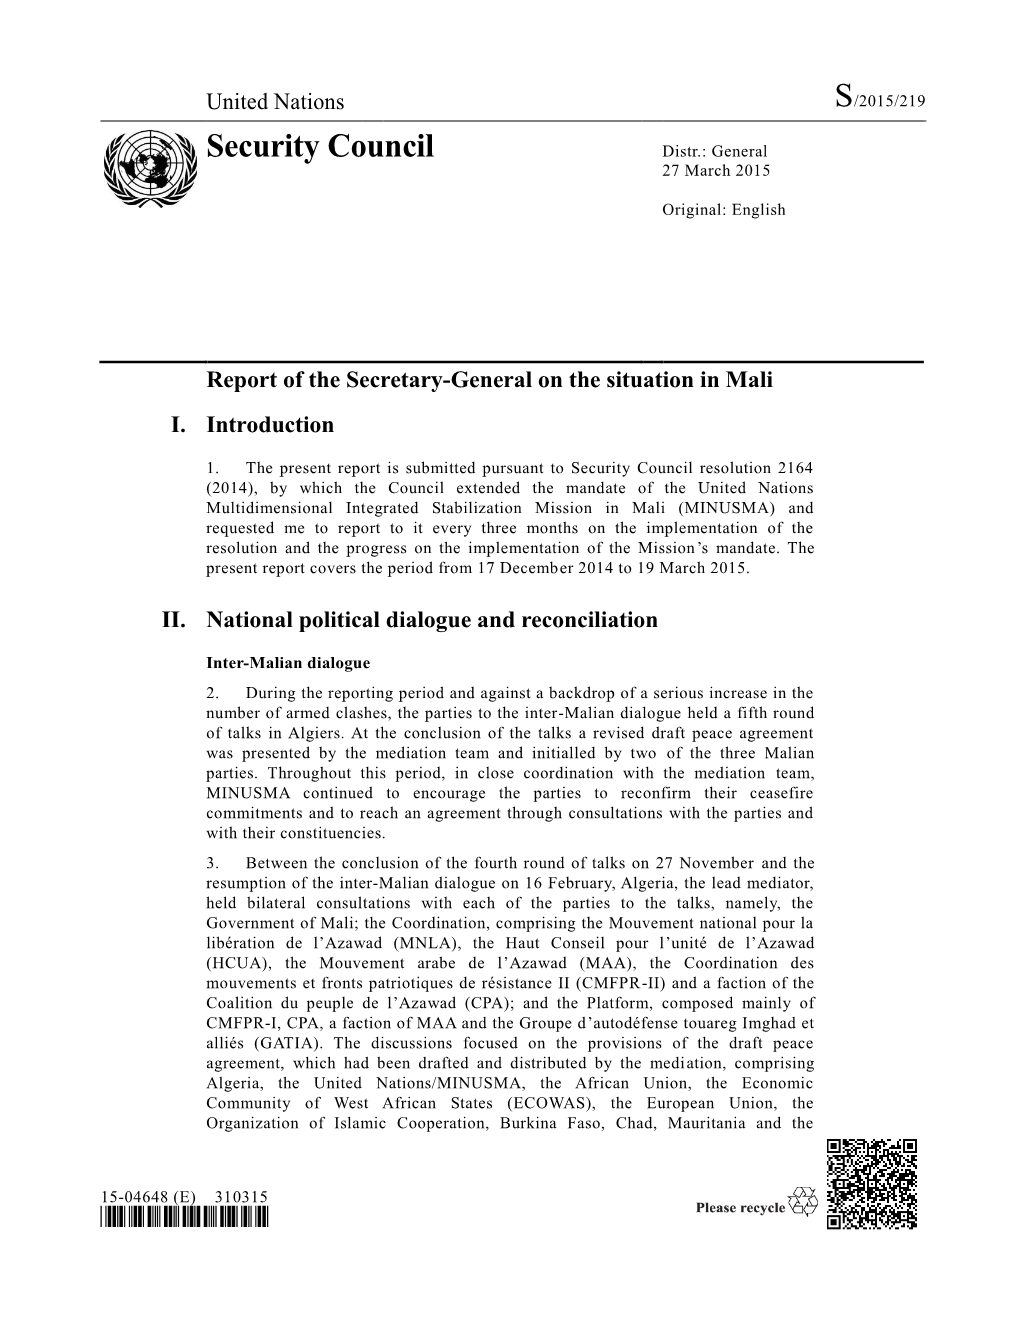 Security Council Distr.: General 27 March 2015